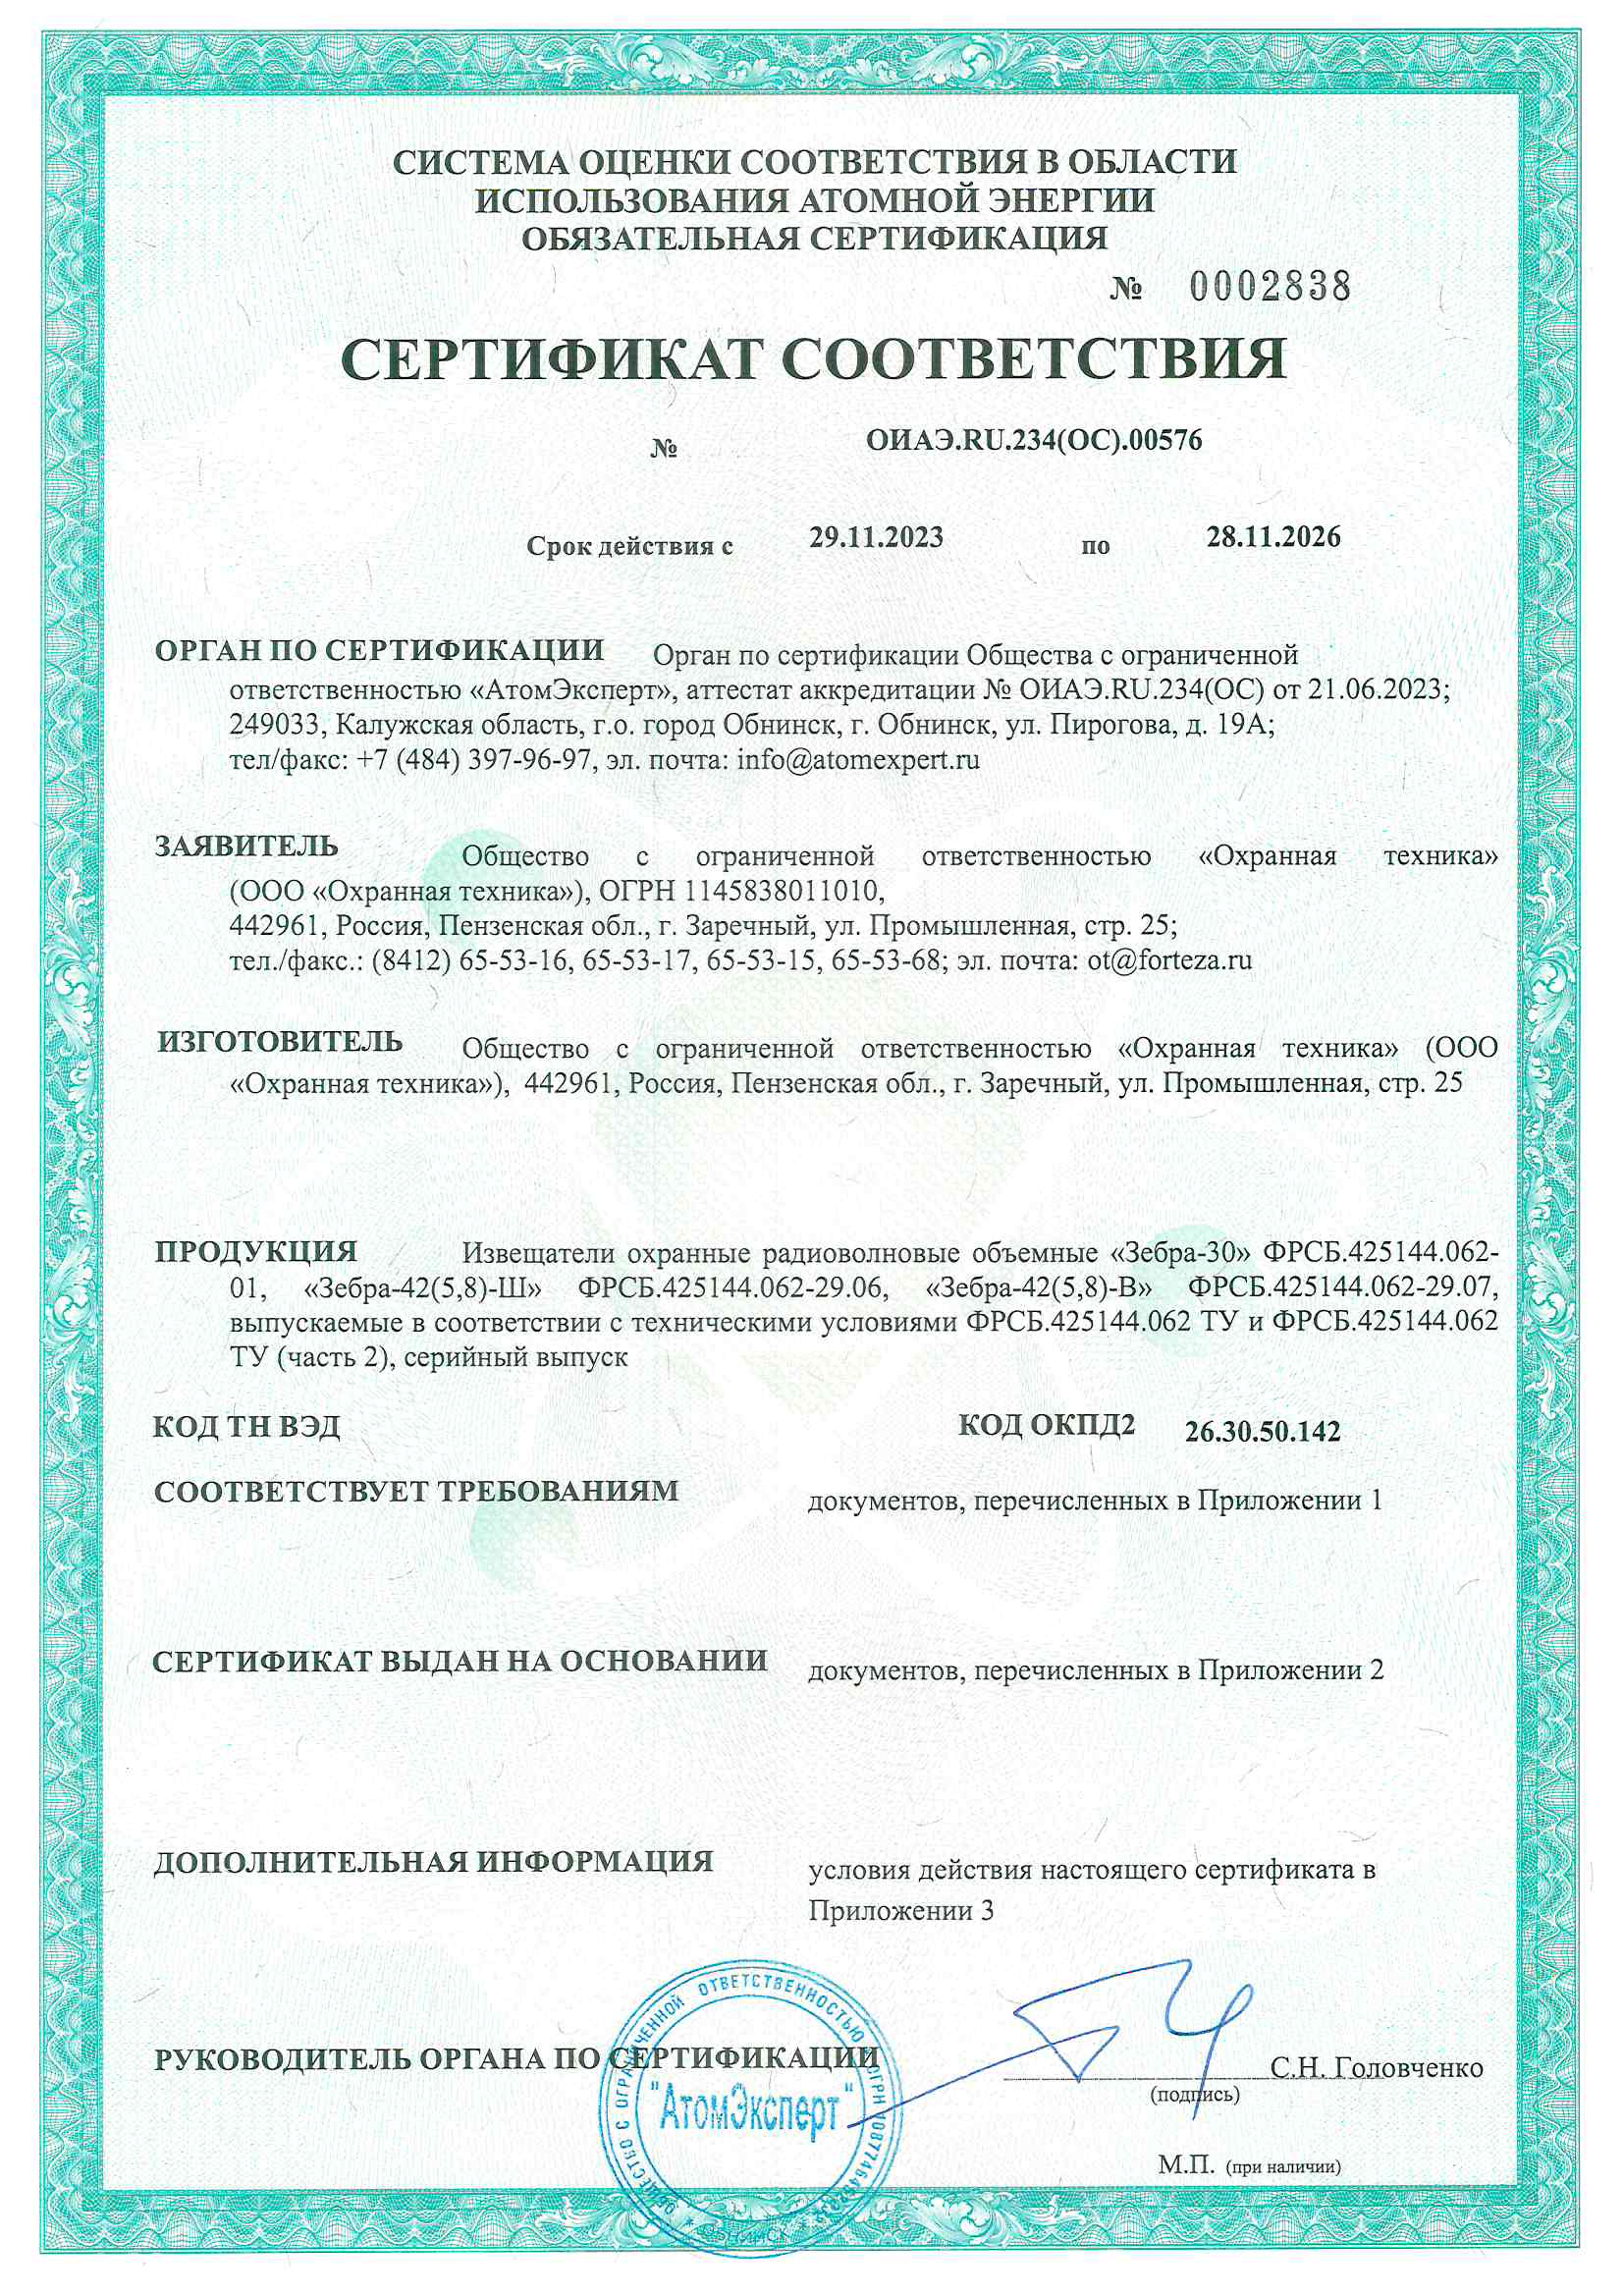 Извещатели ЗЕБРА-30 и ЗЕБРА-42(5,8)-О/Ш получили сертификат Росатома